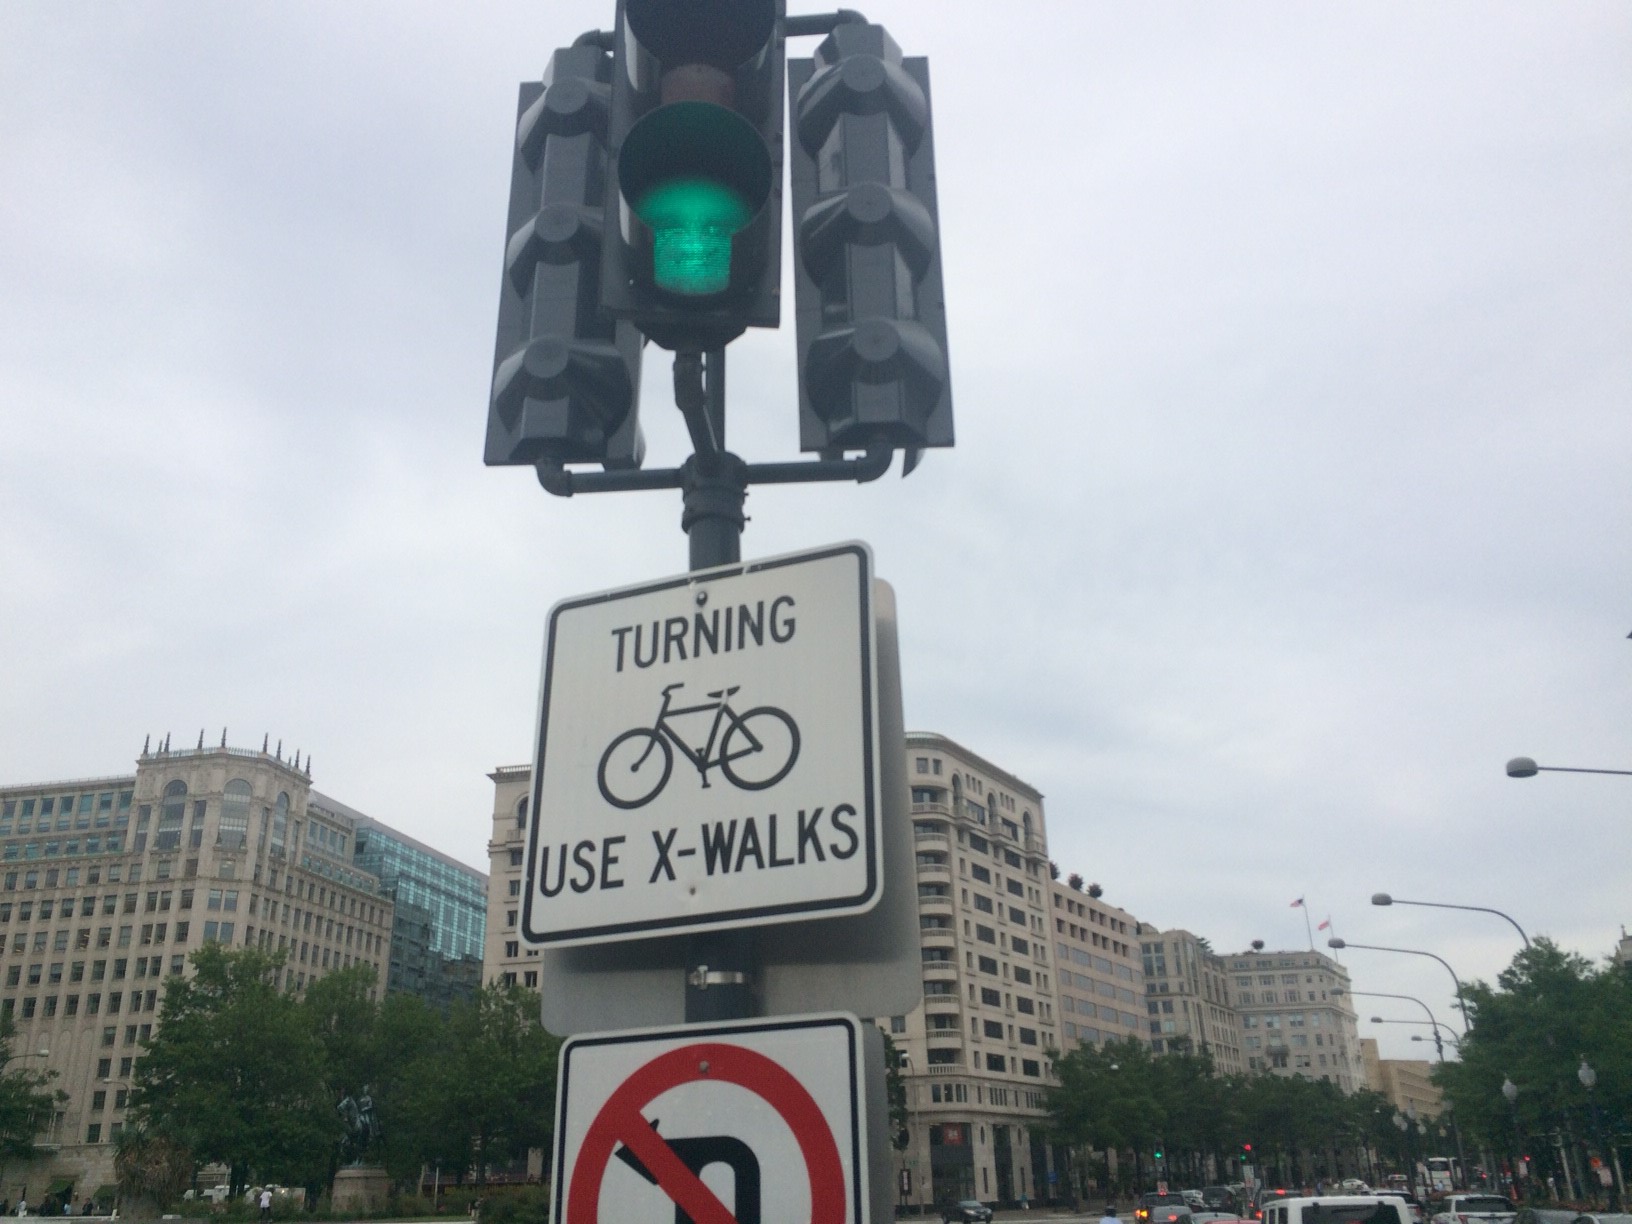 Norton claims a few parking spots blocking Capitol Hill bike lane approval